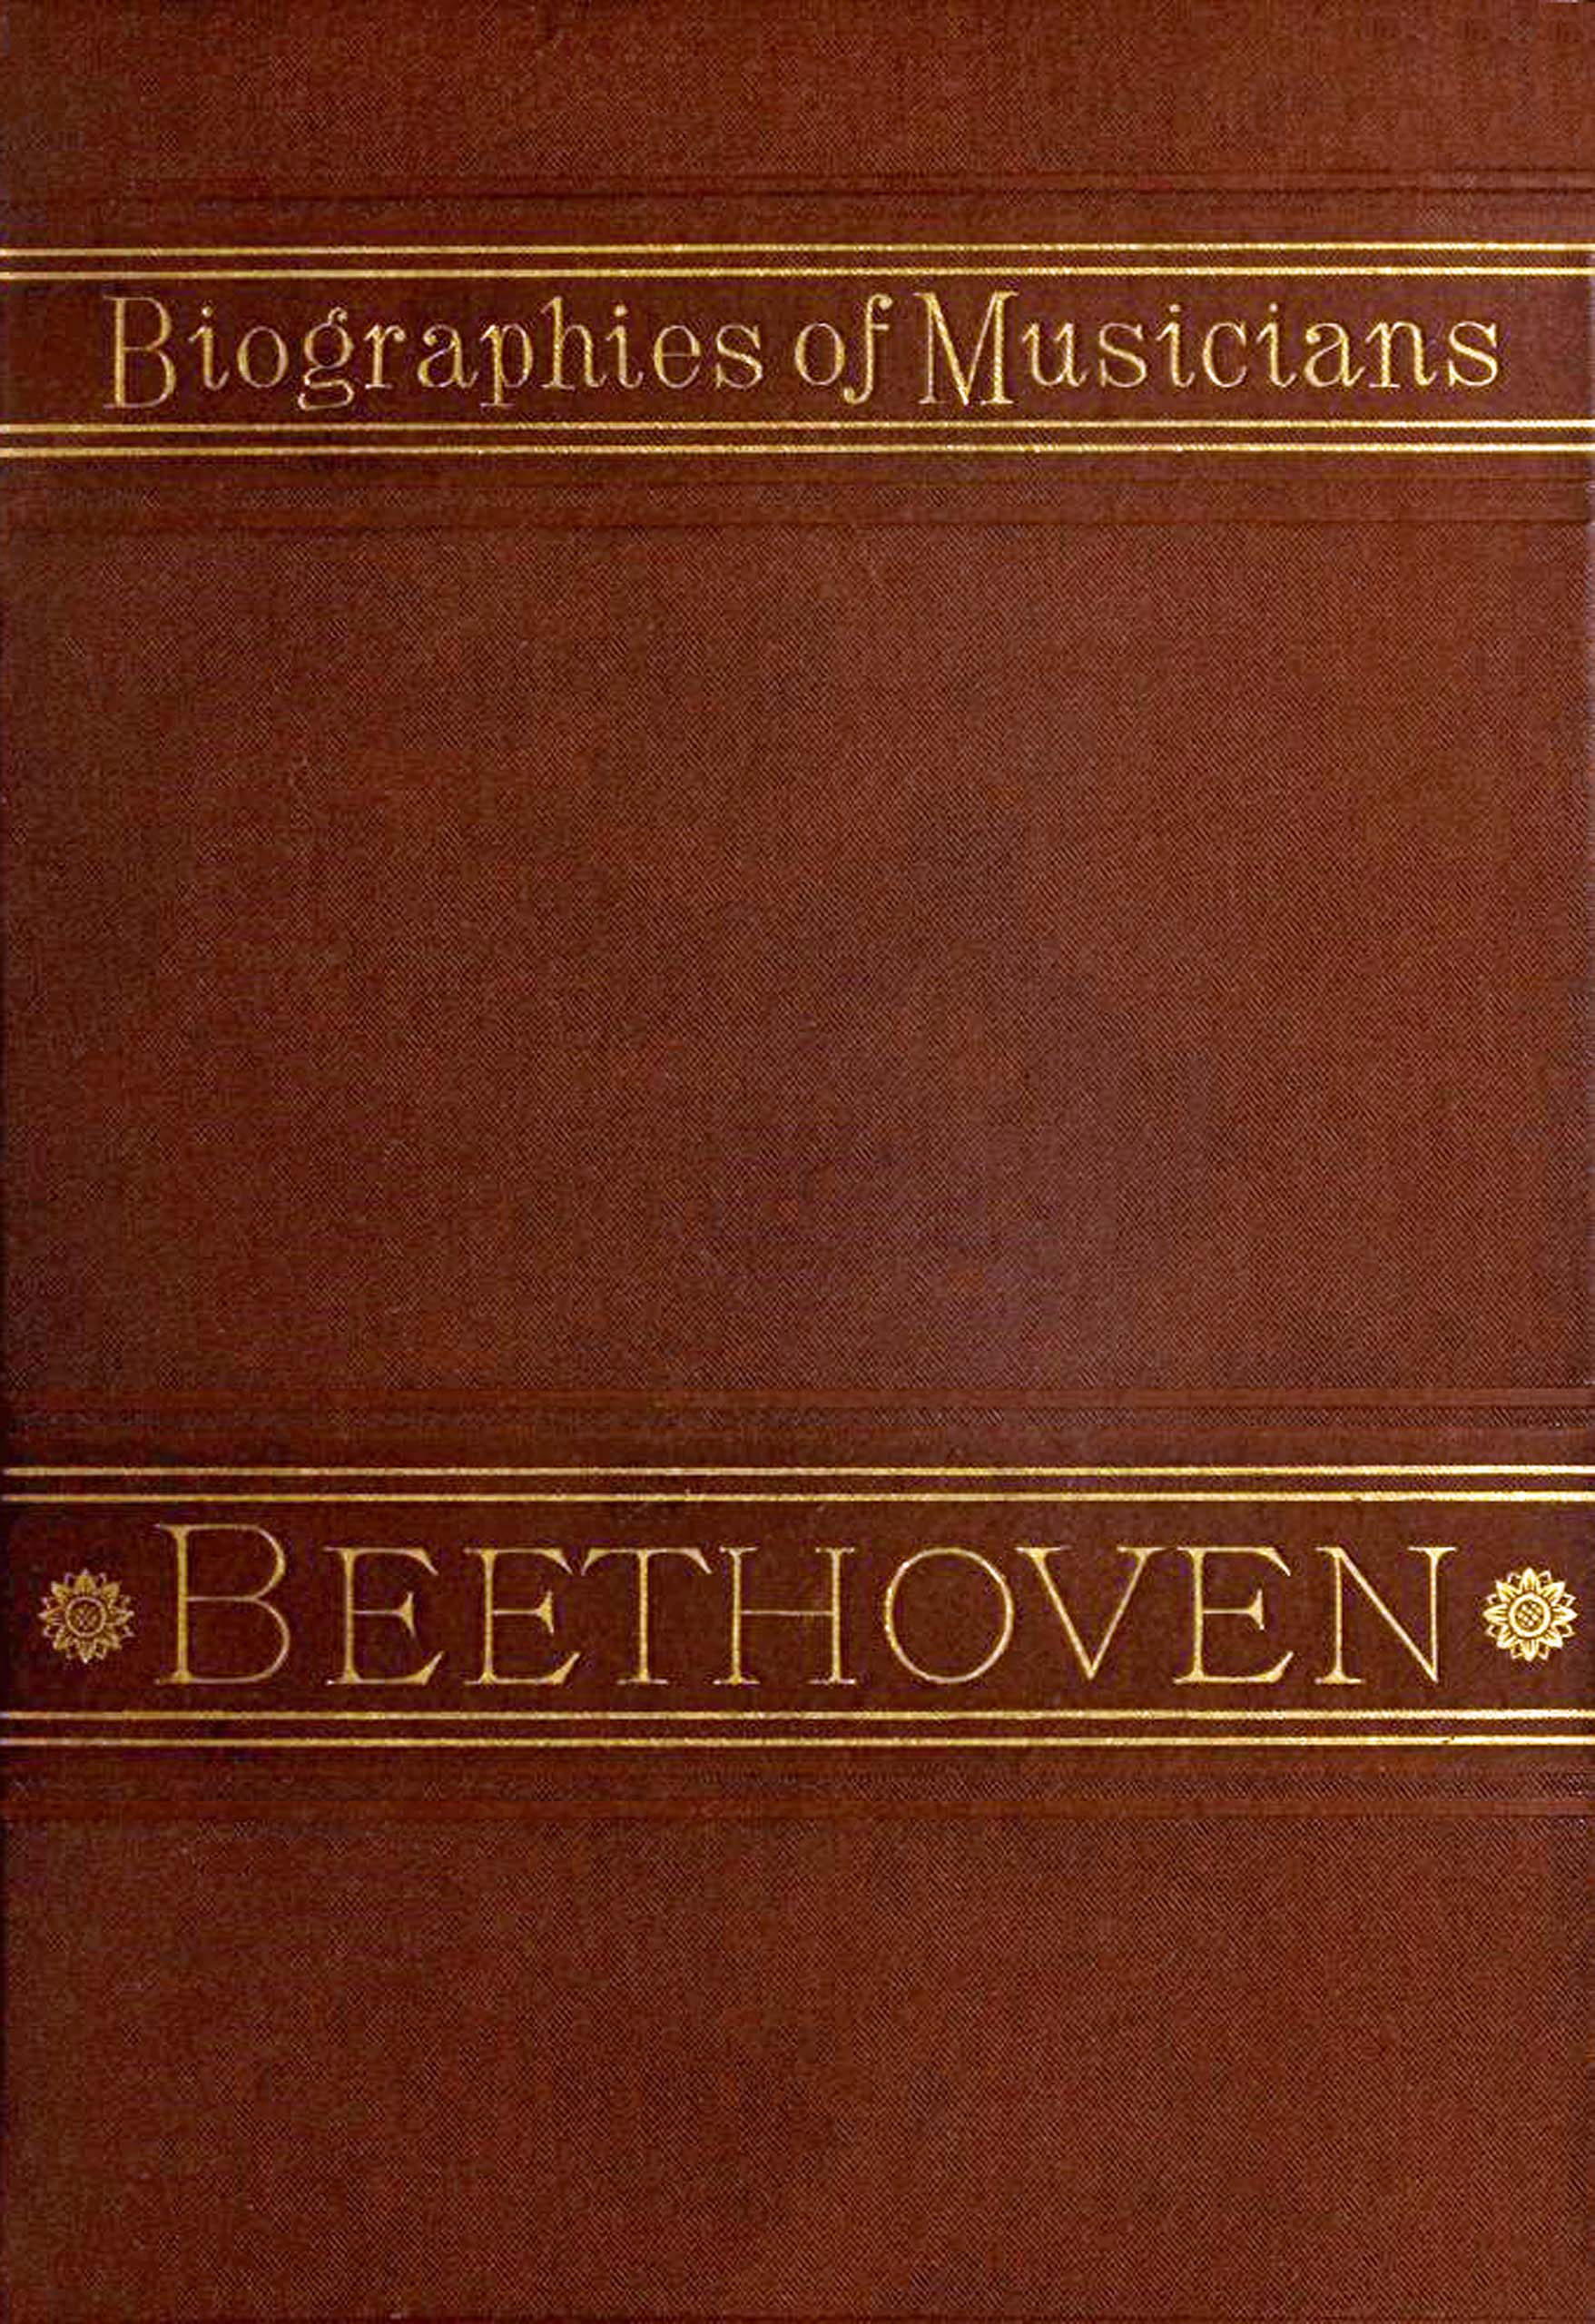 Beethoven'in Hayatı